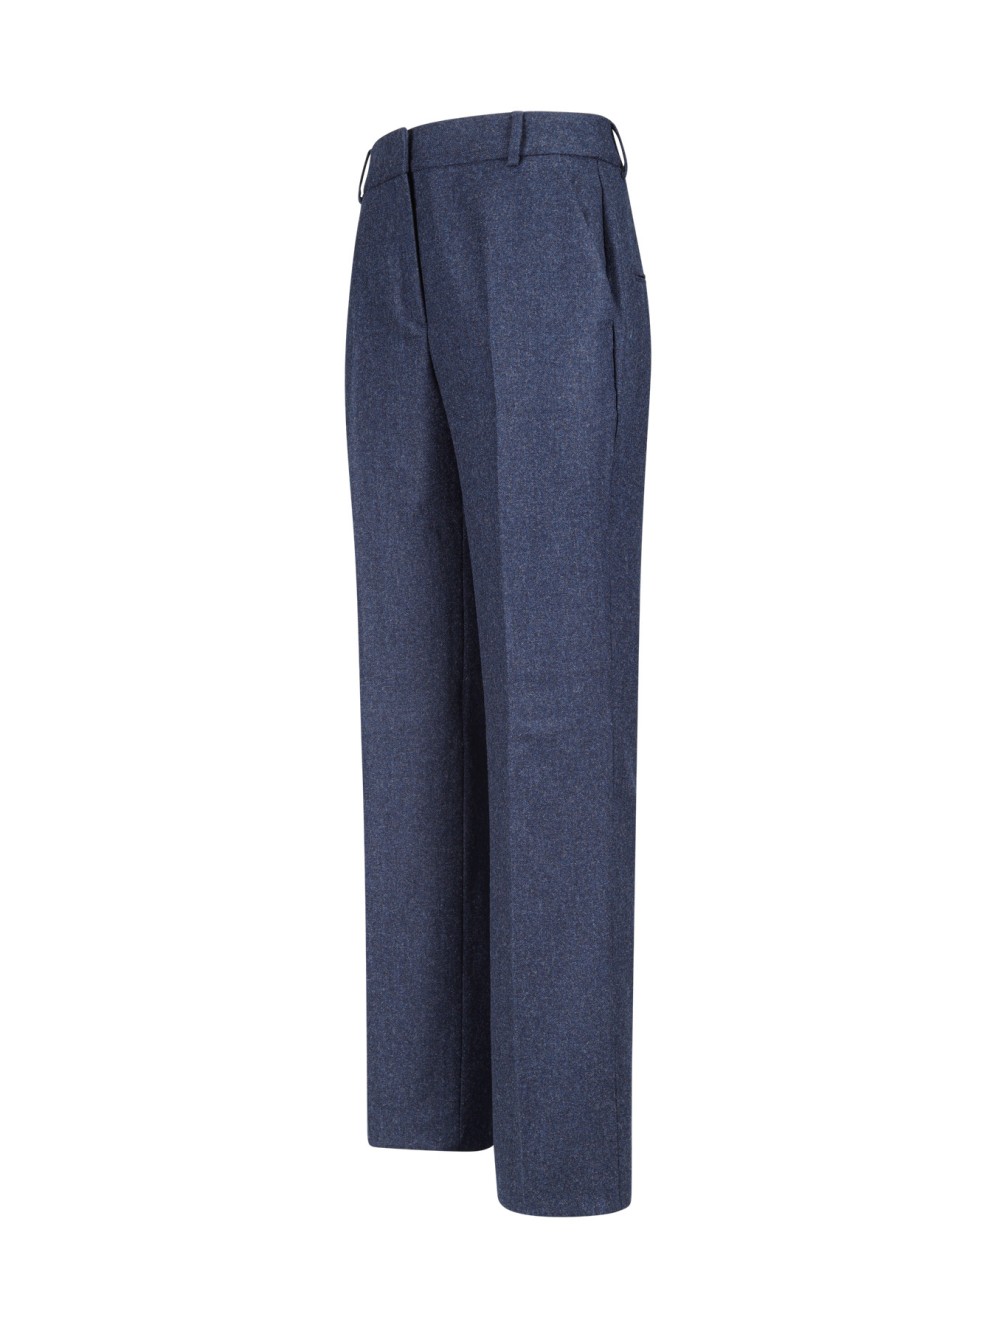 Westray Trousers | Cashmere Wool Herringbone | Navy